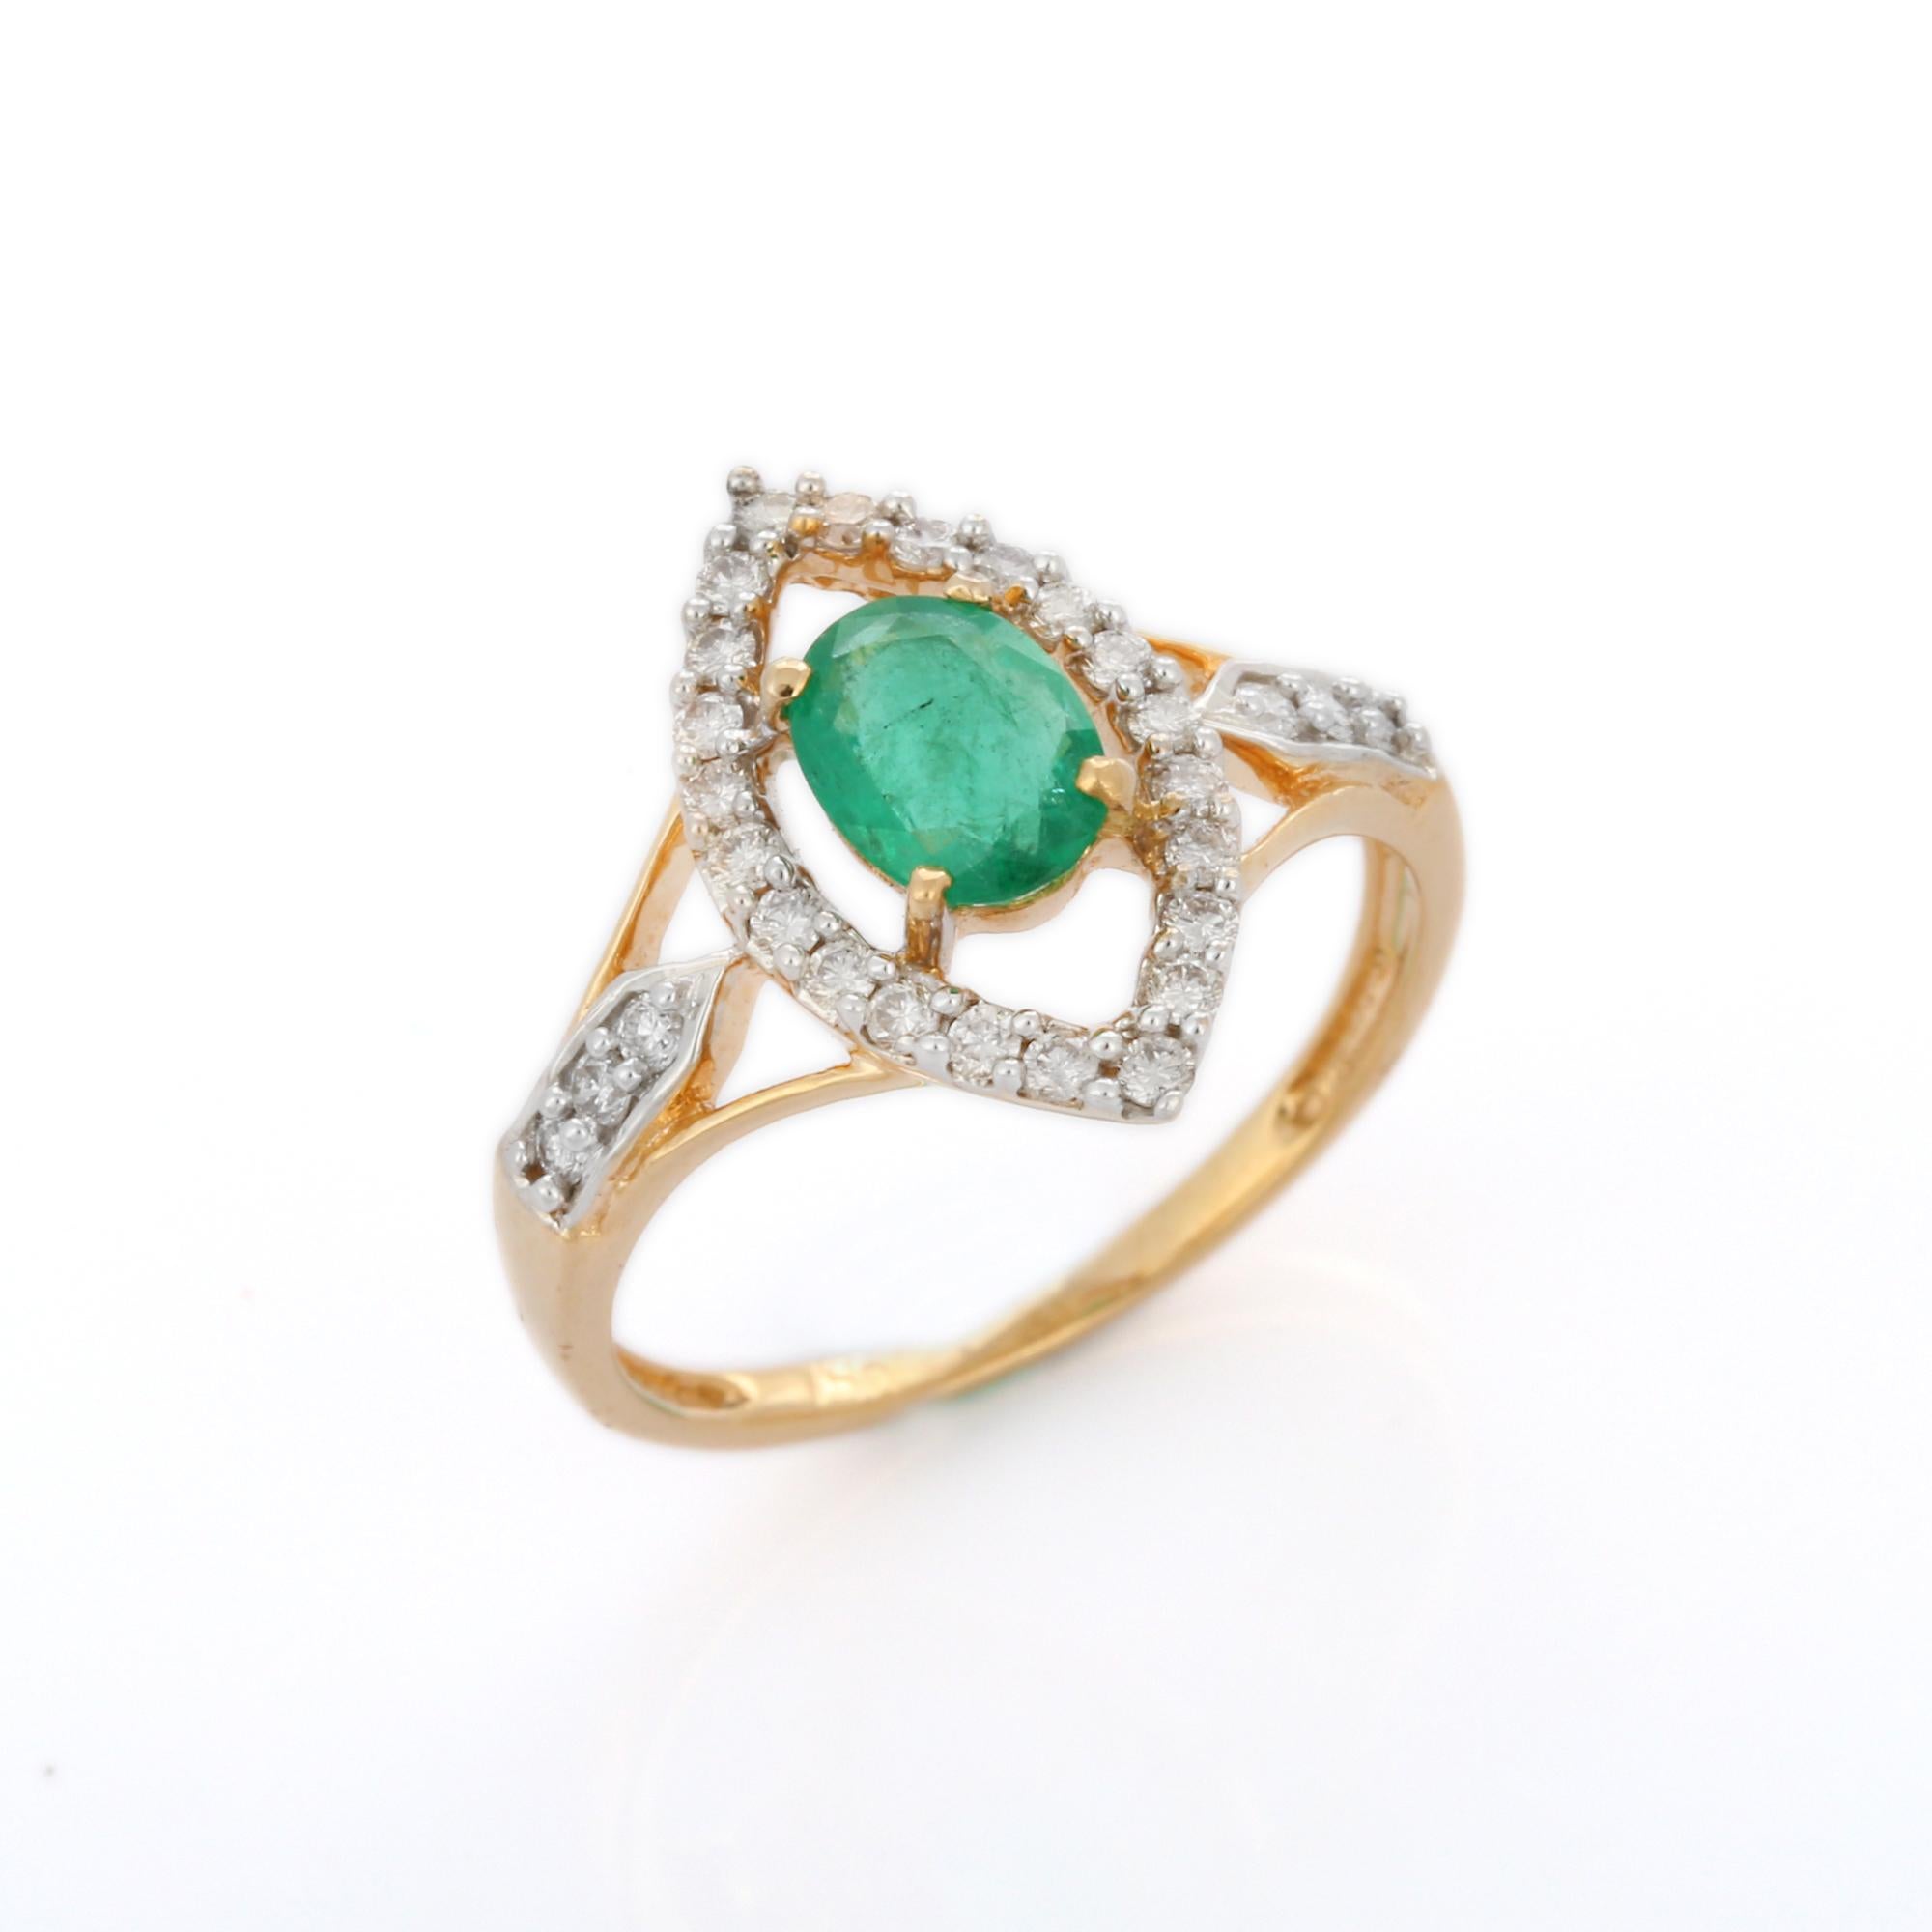 For Sale:  Designer Emerald Diamond Wedding Ring Cocktail Ring in 18K White Gold 4